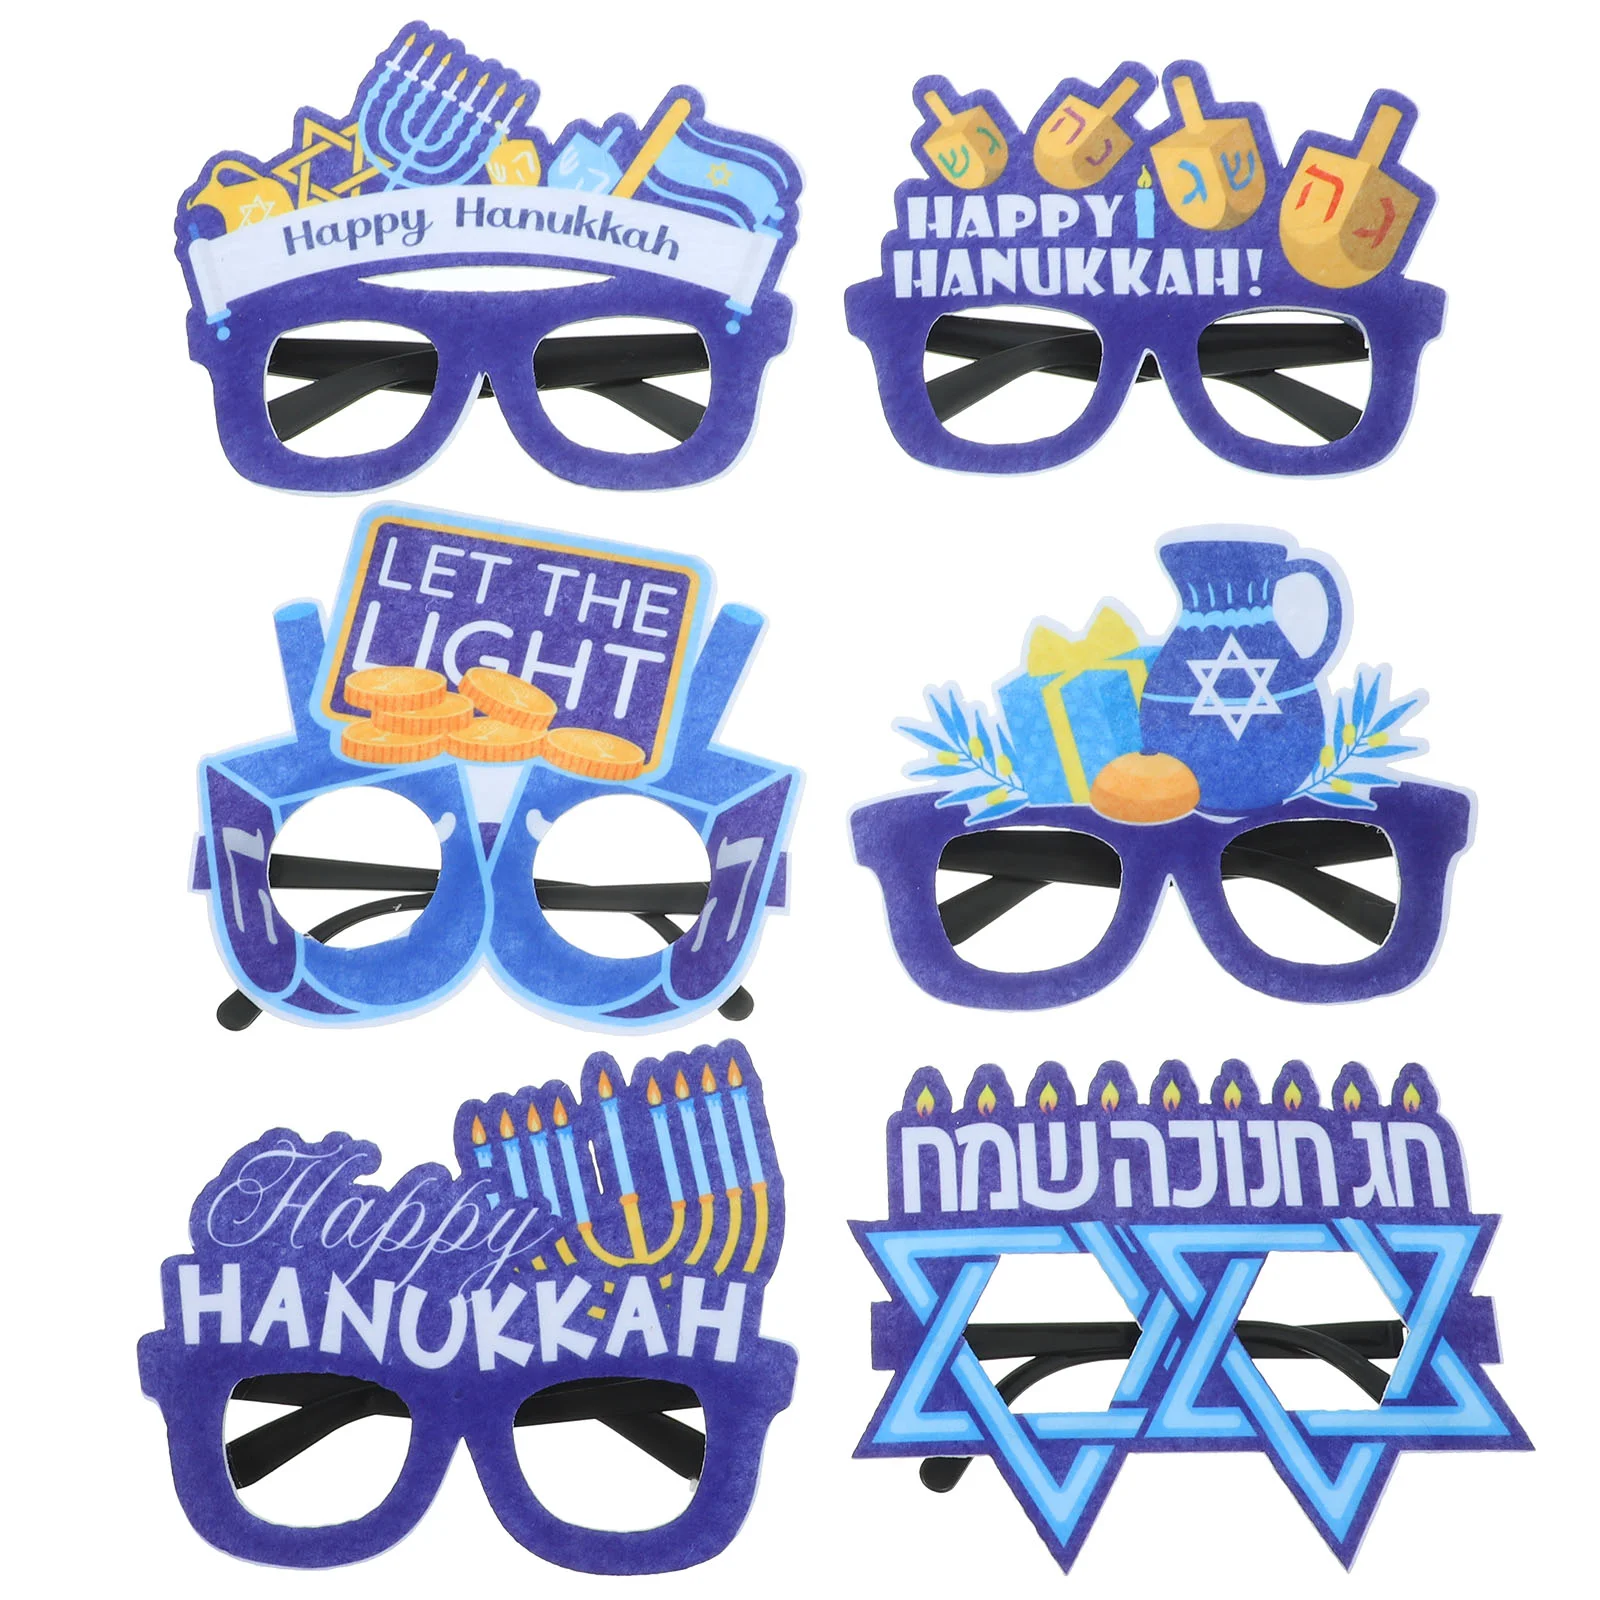 

Happy Hanukkah Eyeglasses Hanukkah Glasses Frame Hanukkah Eyewear Hanukkah Glasses Festival Party Decor Decoration